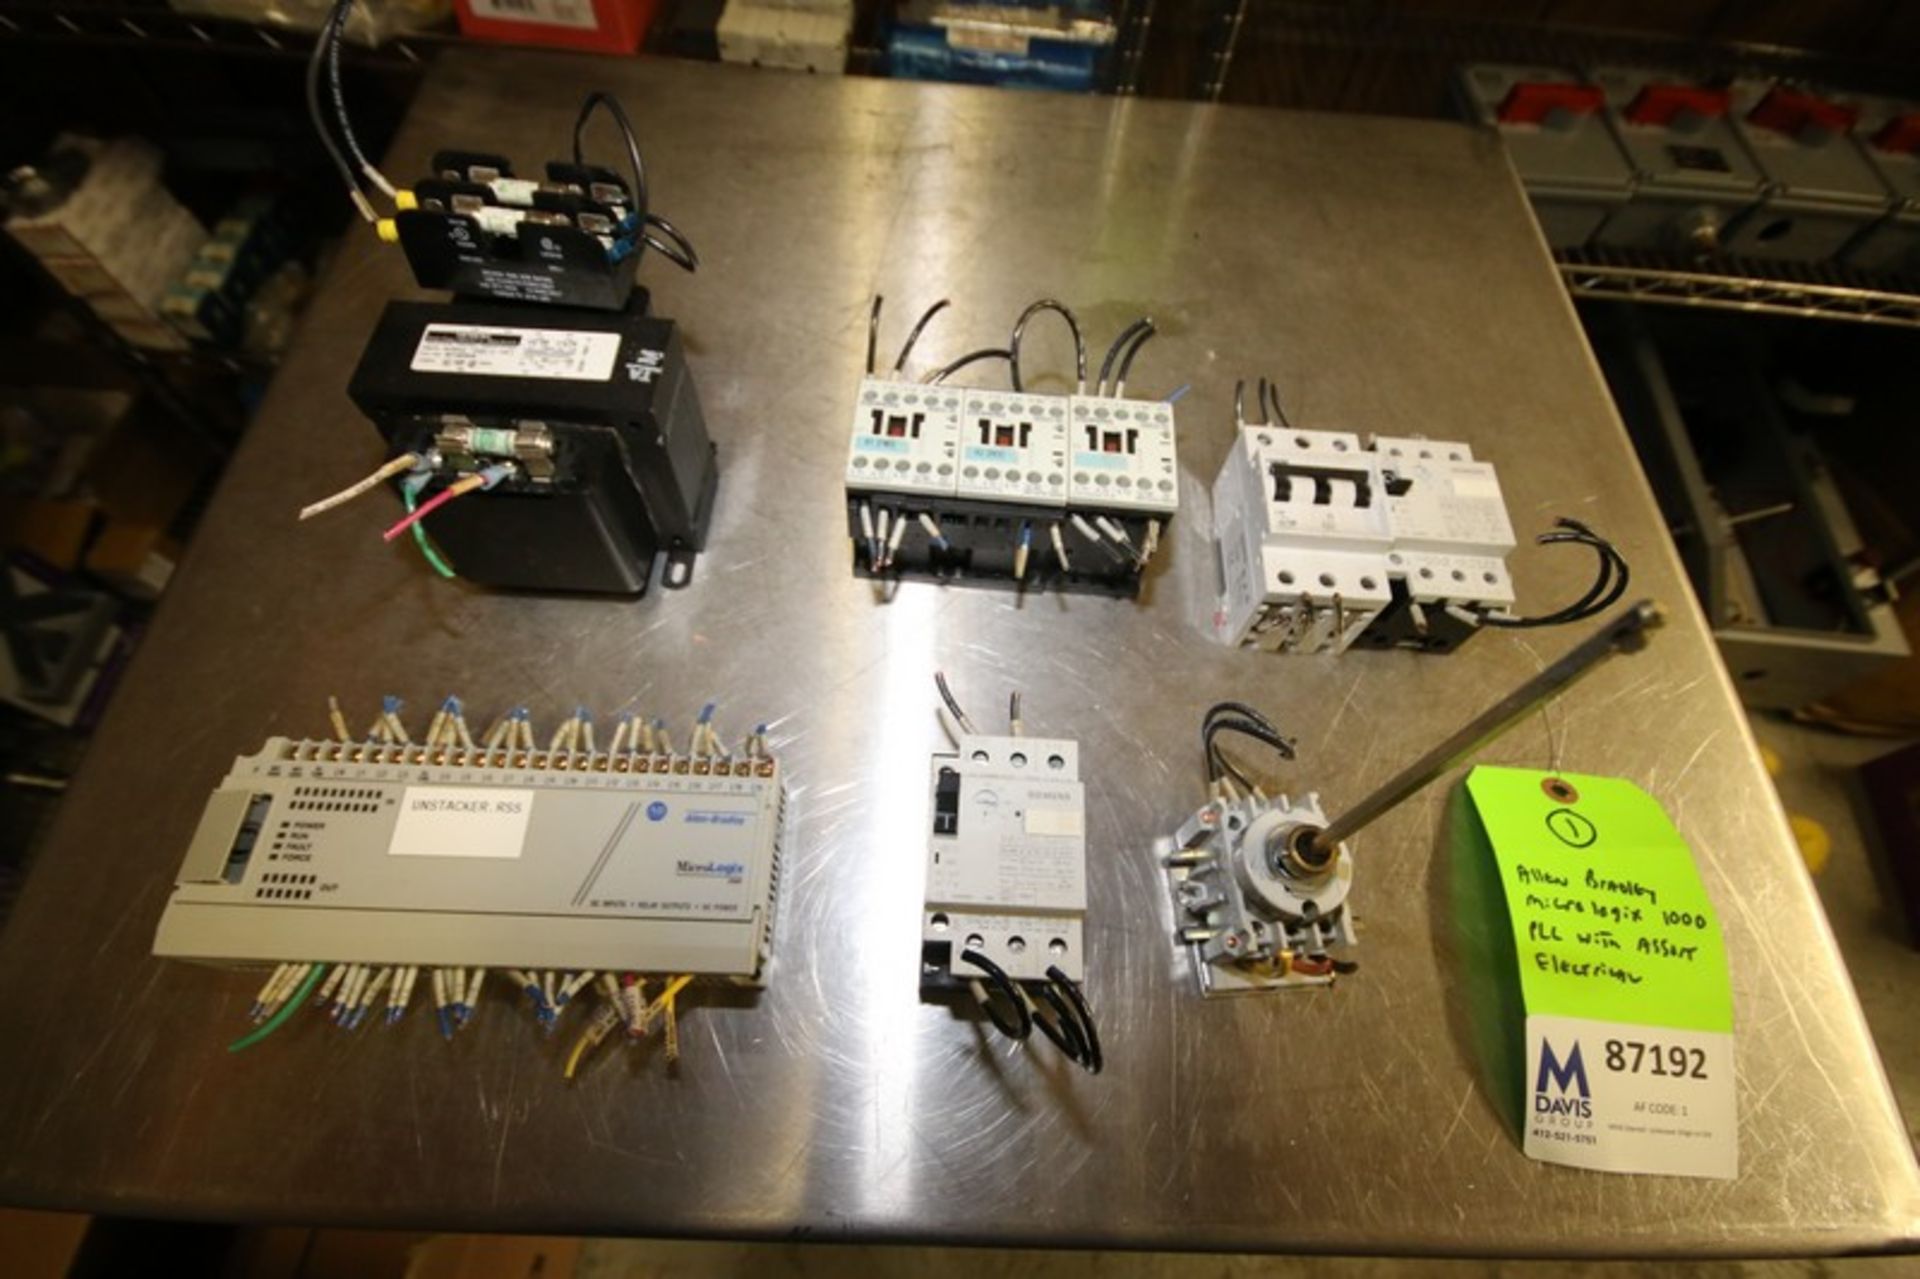 Production Control Panel Electrical Includes Allen Bradley Micrologix 1000 PLC Controller - Cat. No.